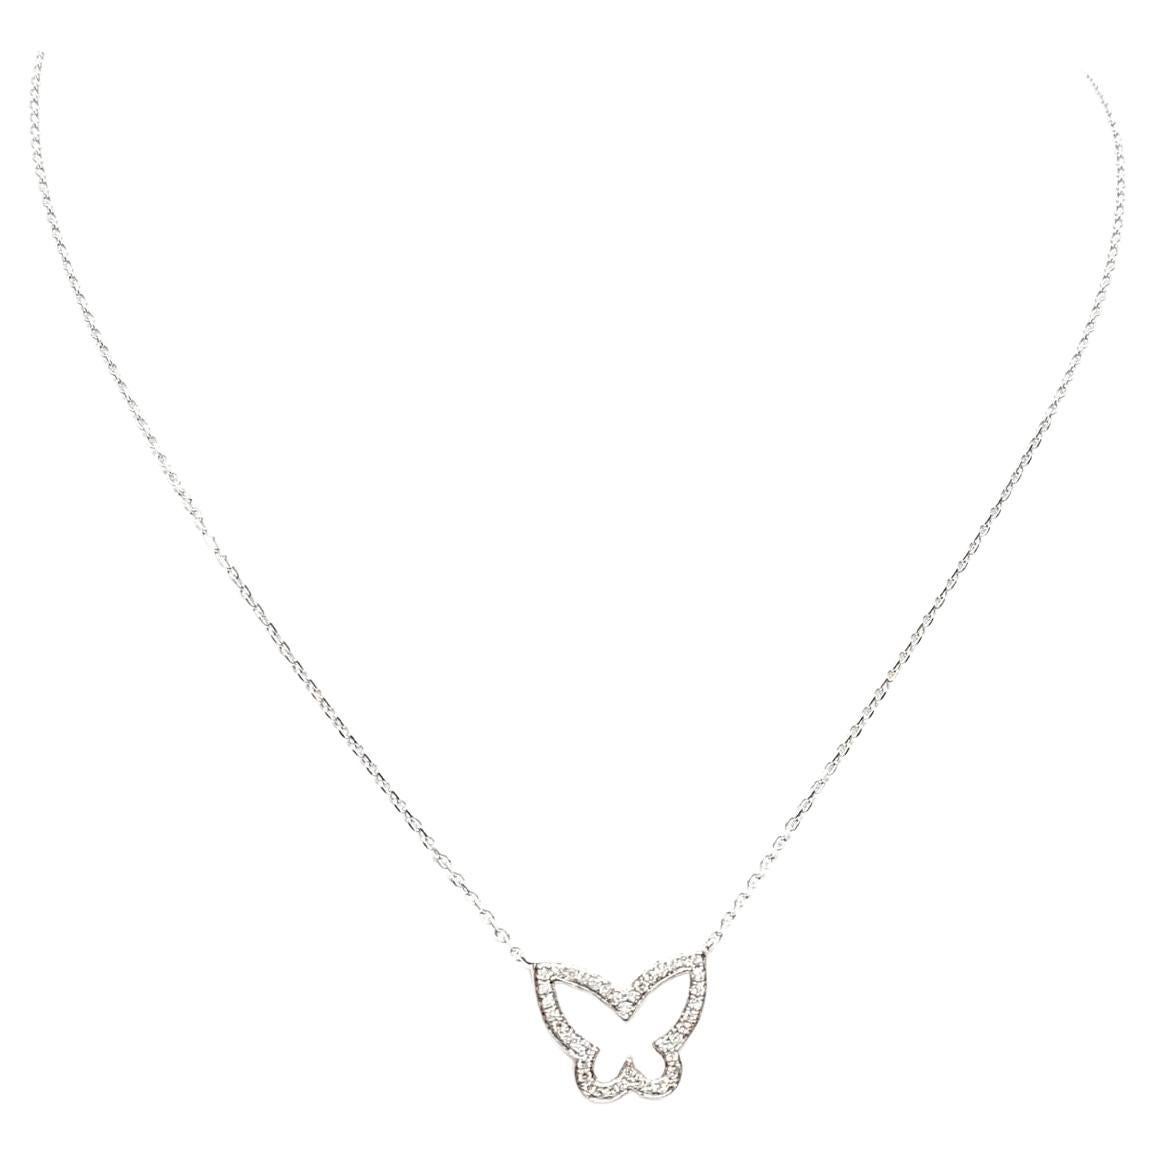 Chain Necklace White GoldDiamond For Sale